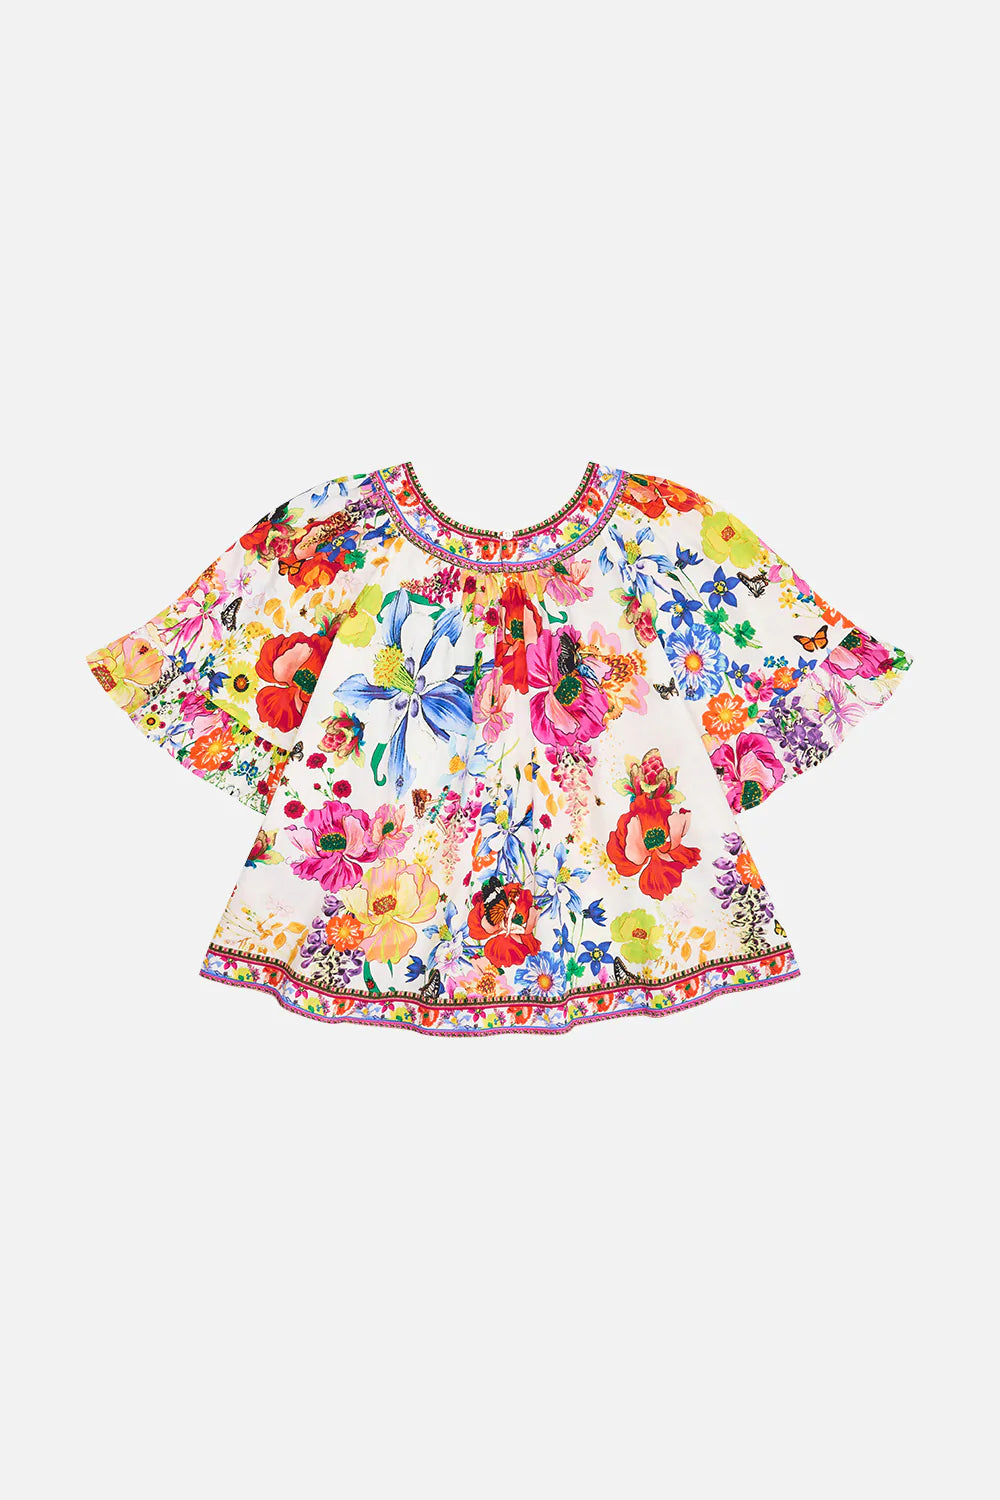 Fairy Gang Kids Yoke Top Dress 4-10 GIRLS CLOTHING CAMILLA 